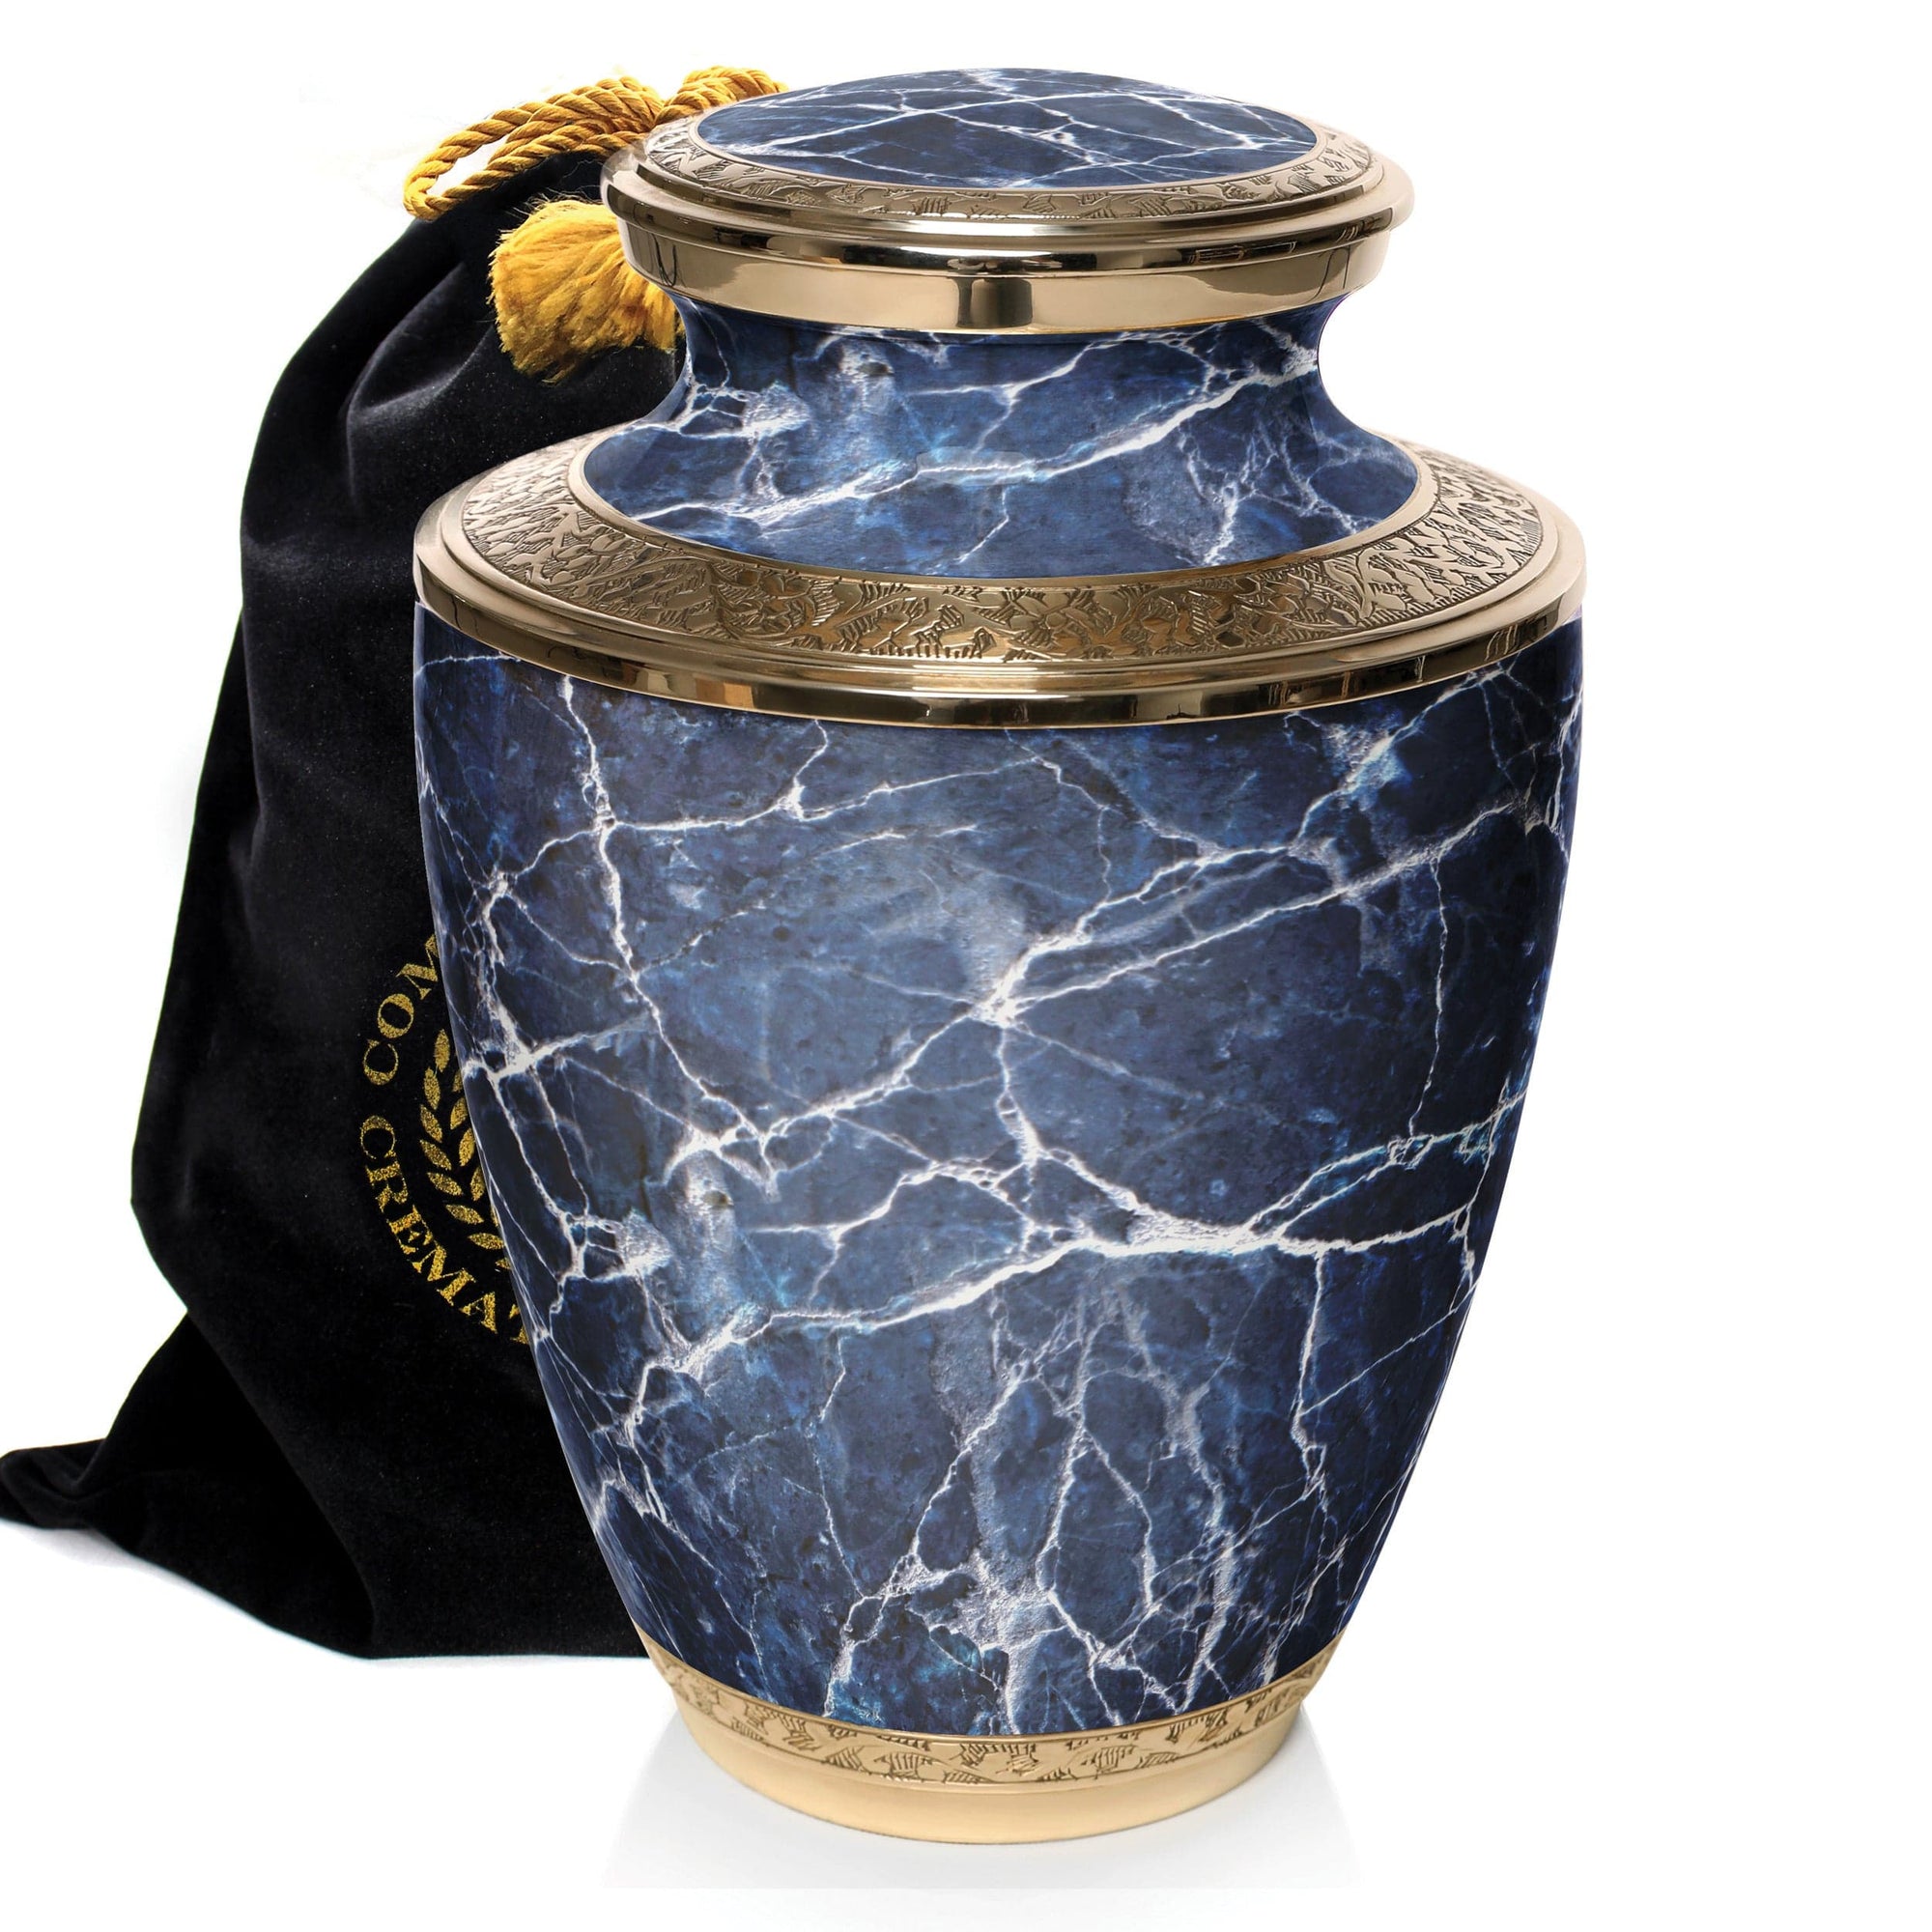 https://cdn.shopify.com/s/files/1/0432/2731/6385/products/commemorative-cremation-urns-marble-elegance-blue-cremation-urn-37426164695253_2000x.jpg?v=1651338354